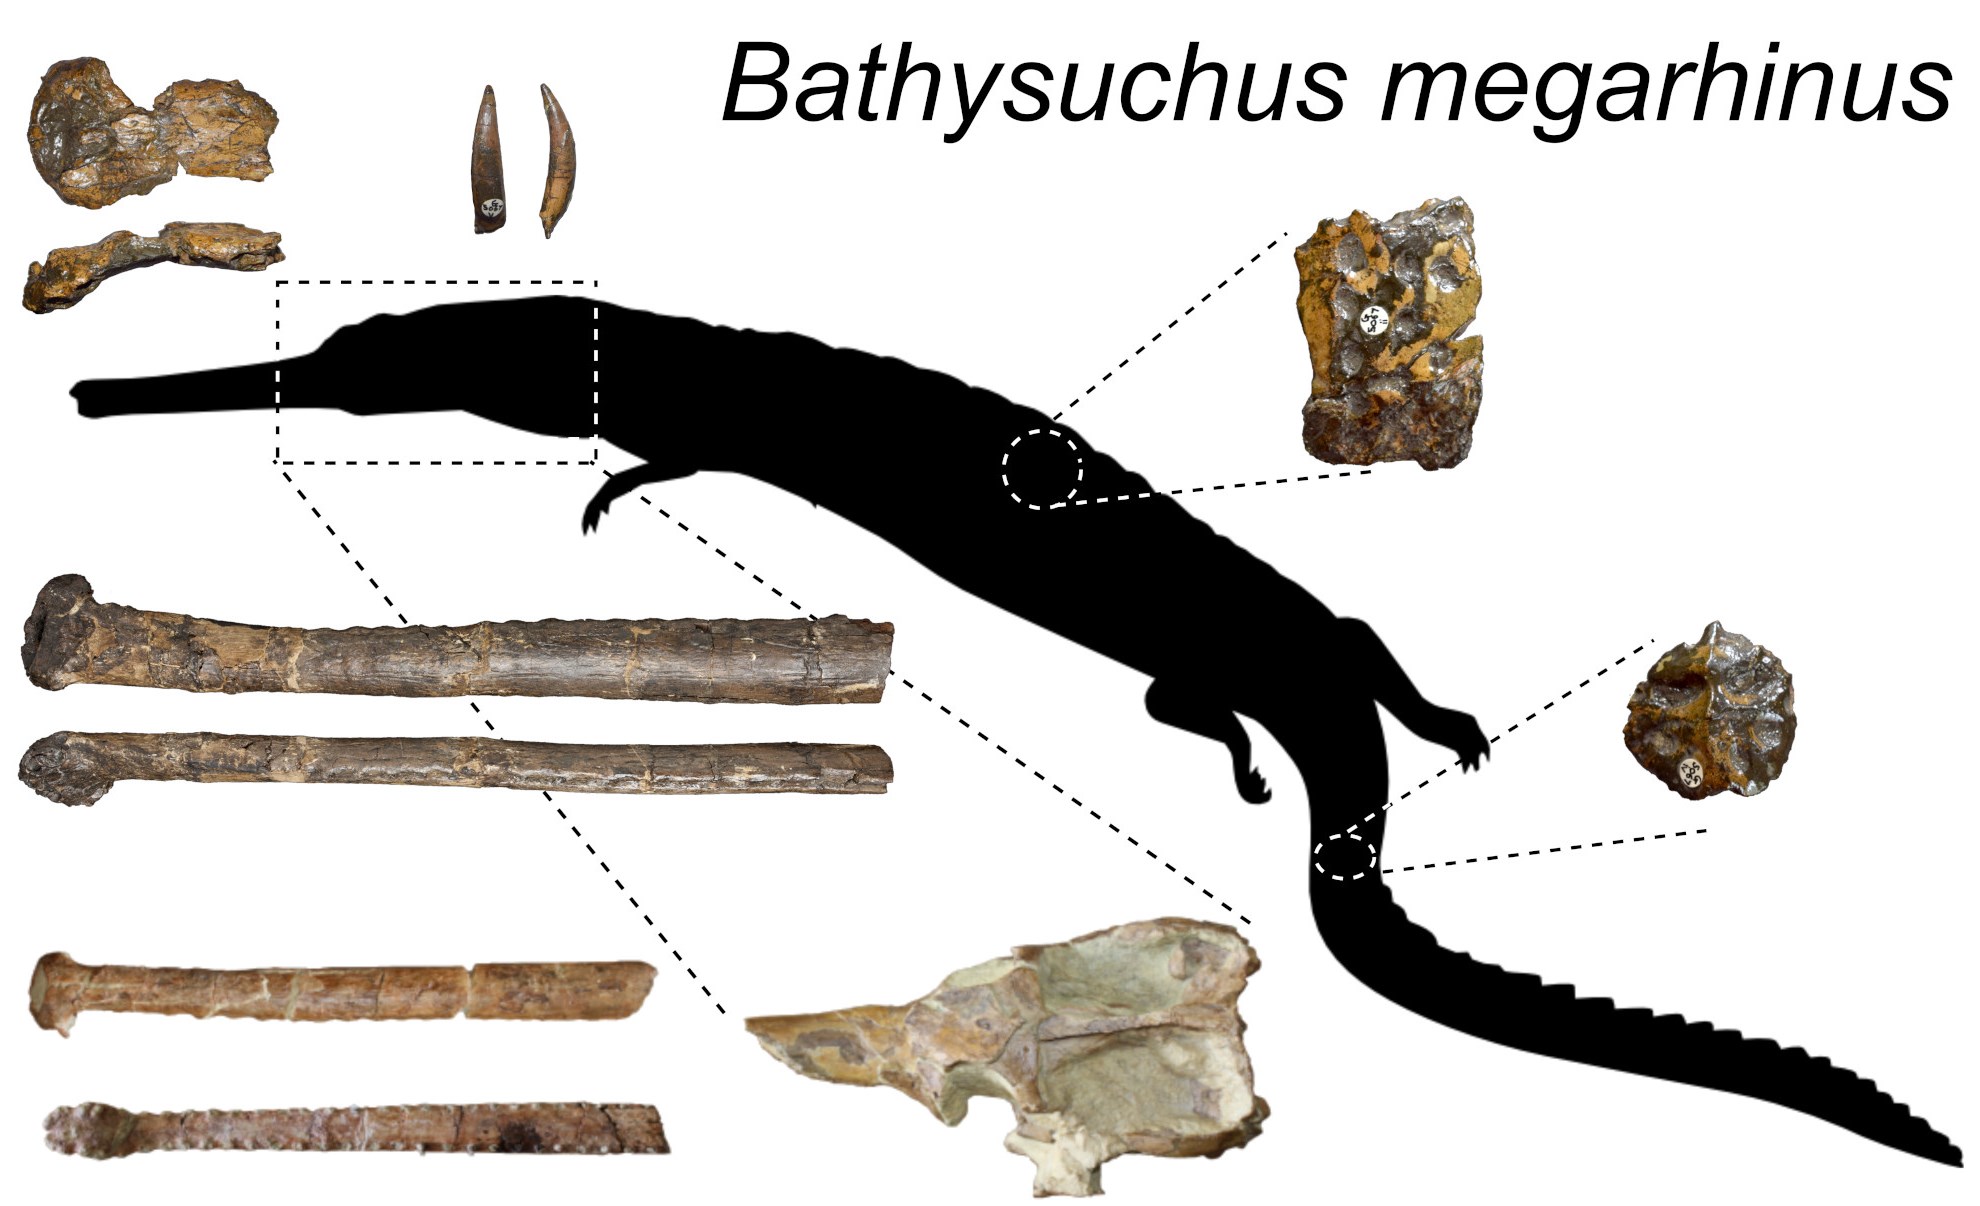 Collection of specimens referred to as Bathysuchus megarhinus